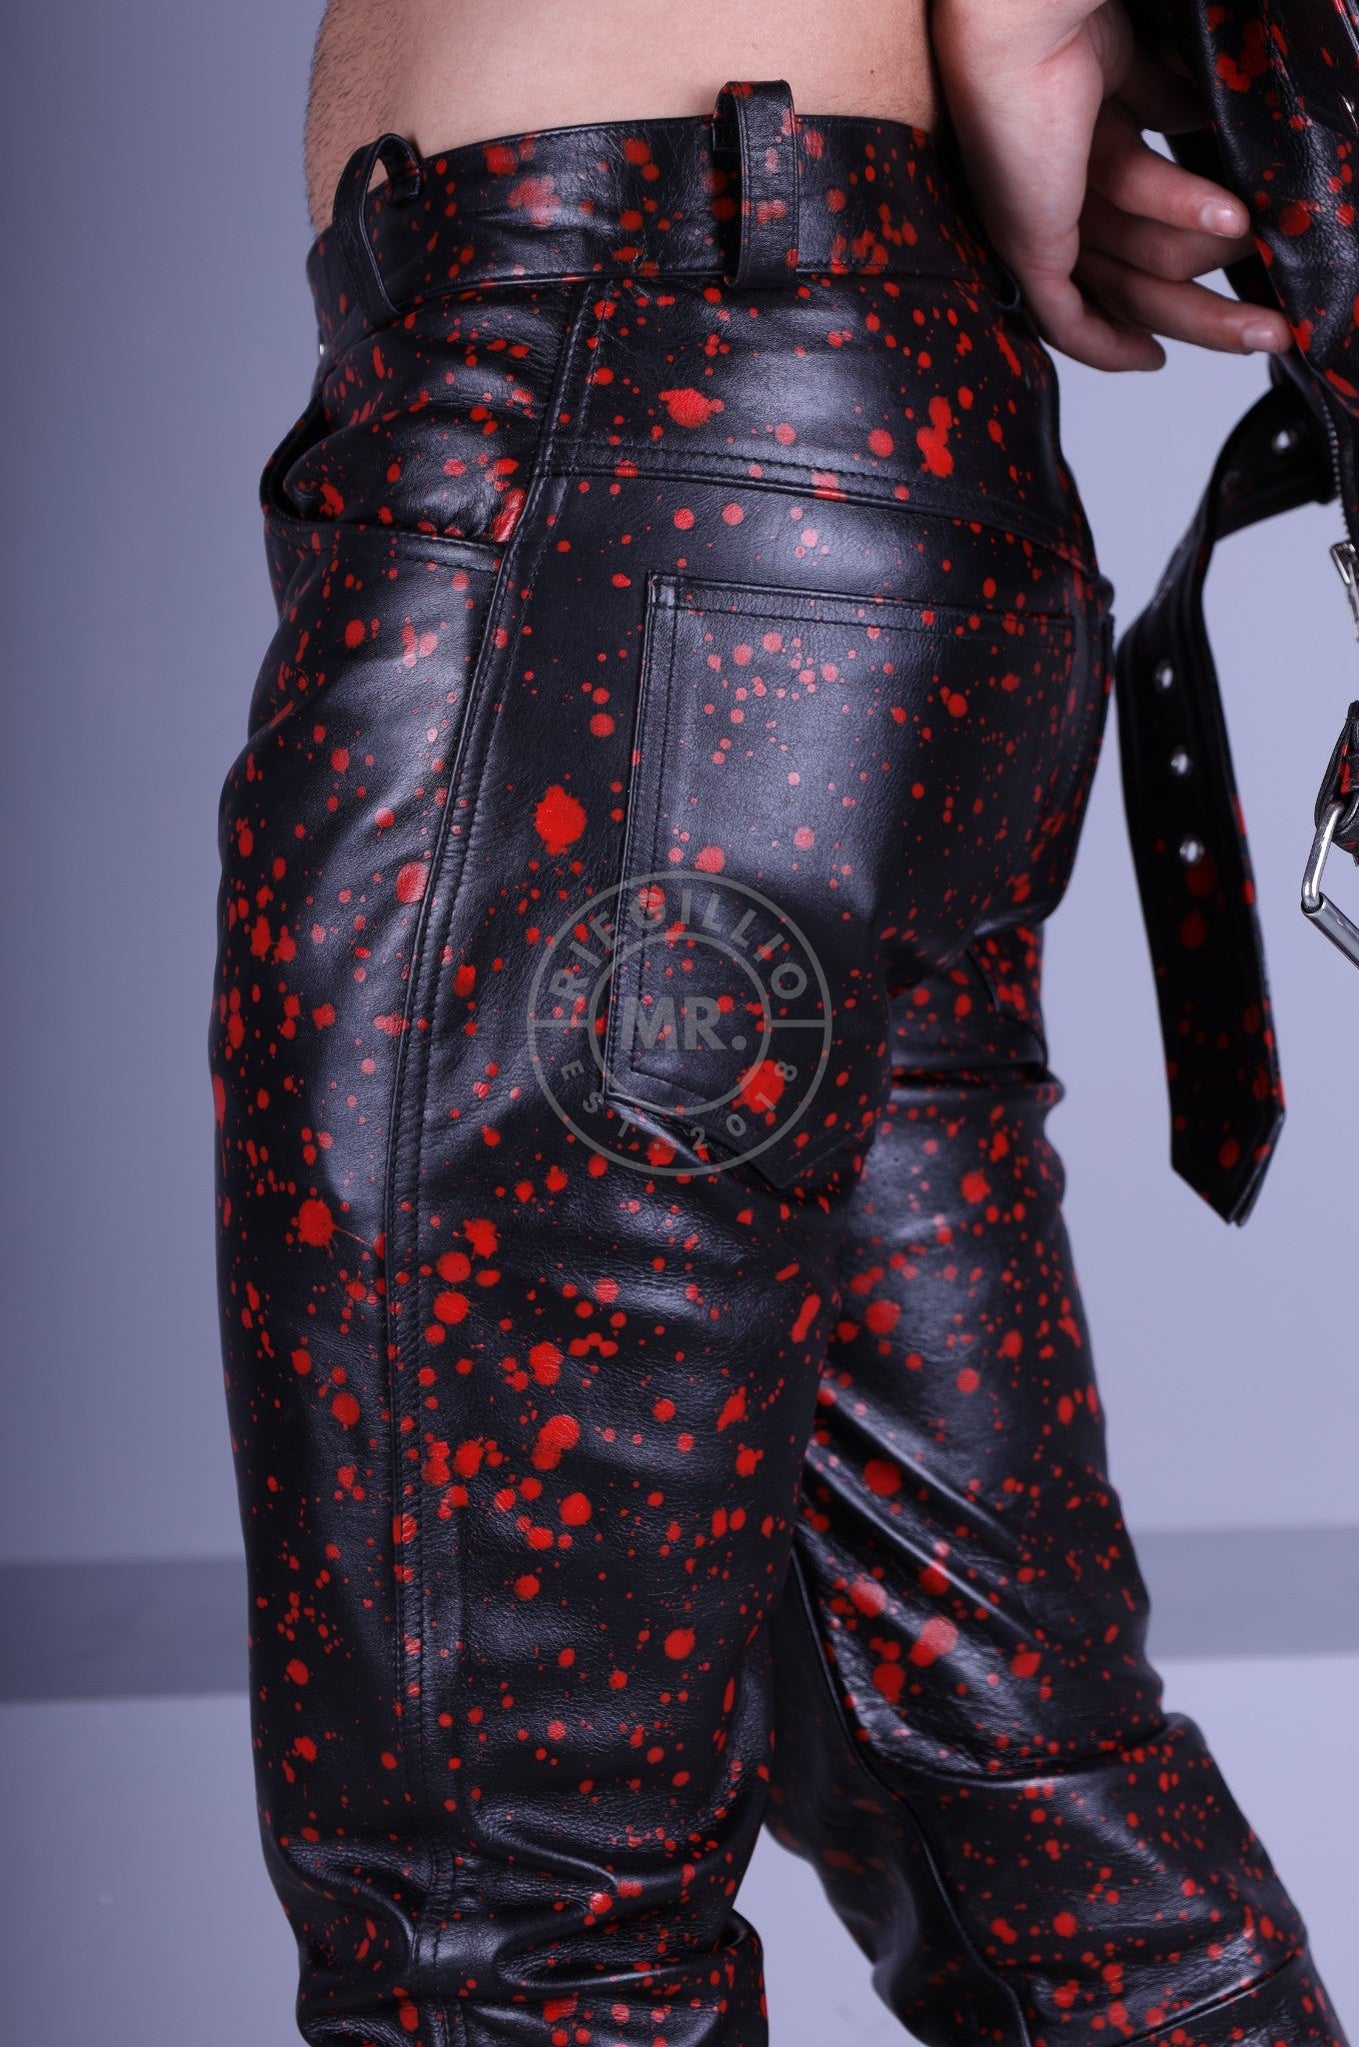 Black Leather Splashed Pants - Red at MR. Riegillio